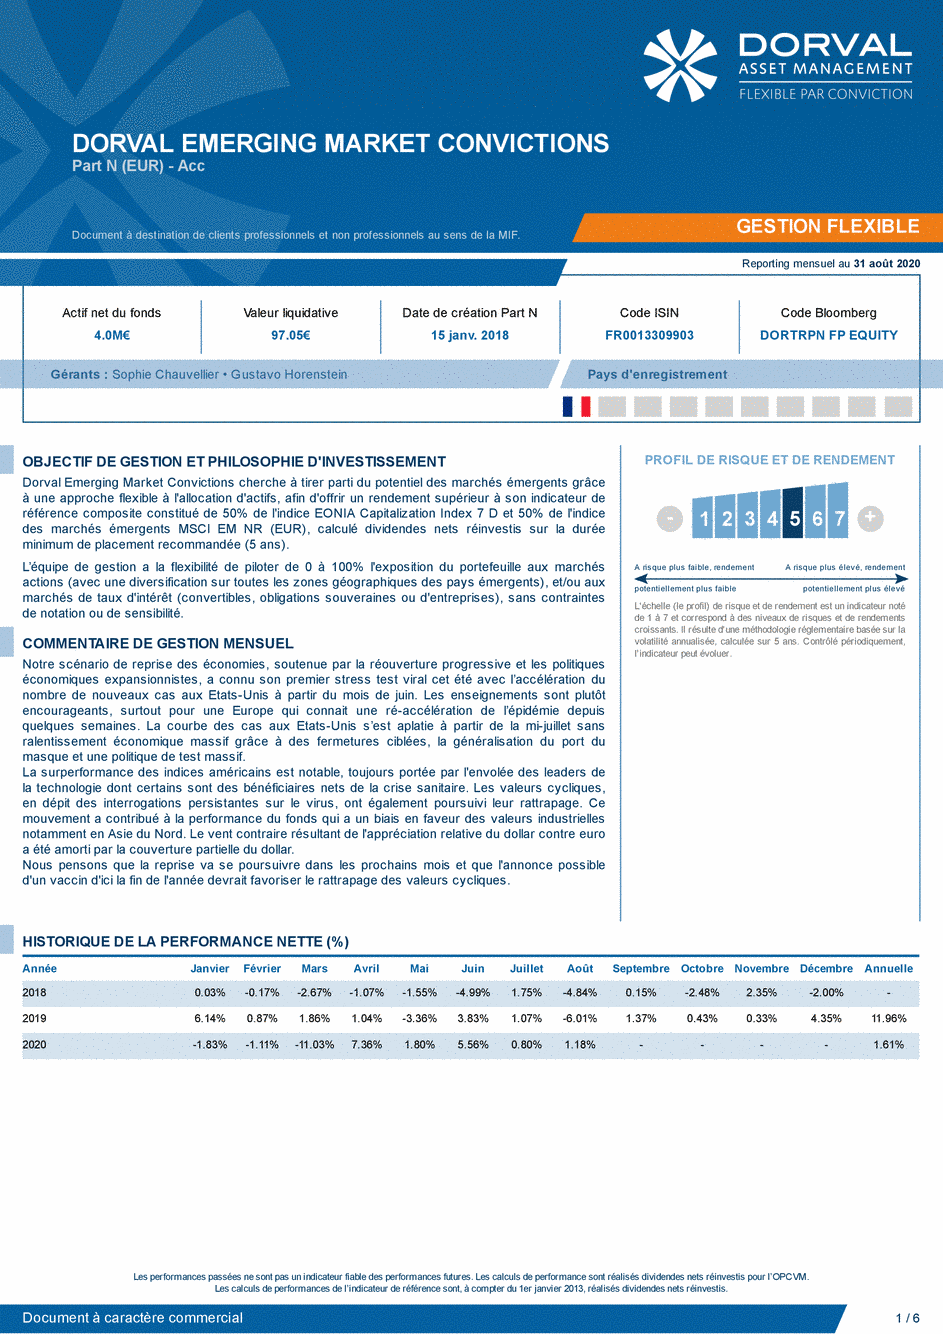 Reporting DORVAL EMERGING MARKET CONVICTIONS N - 31/08/2020 - Français